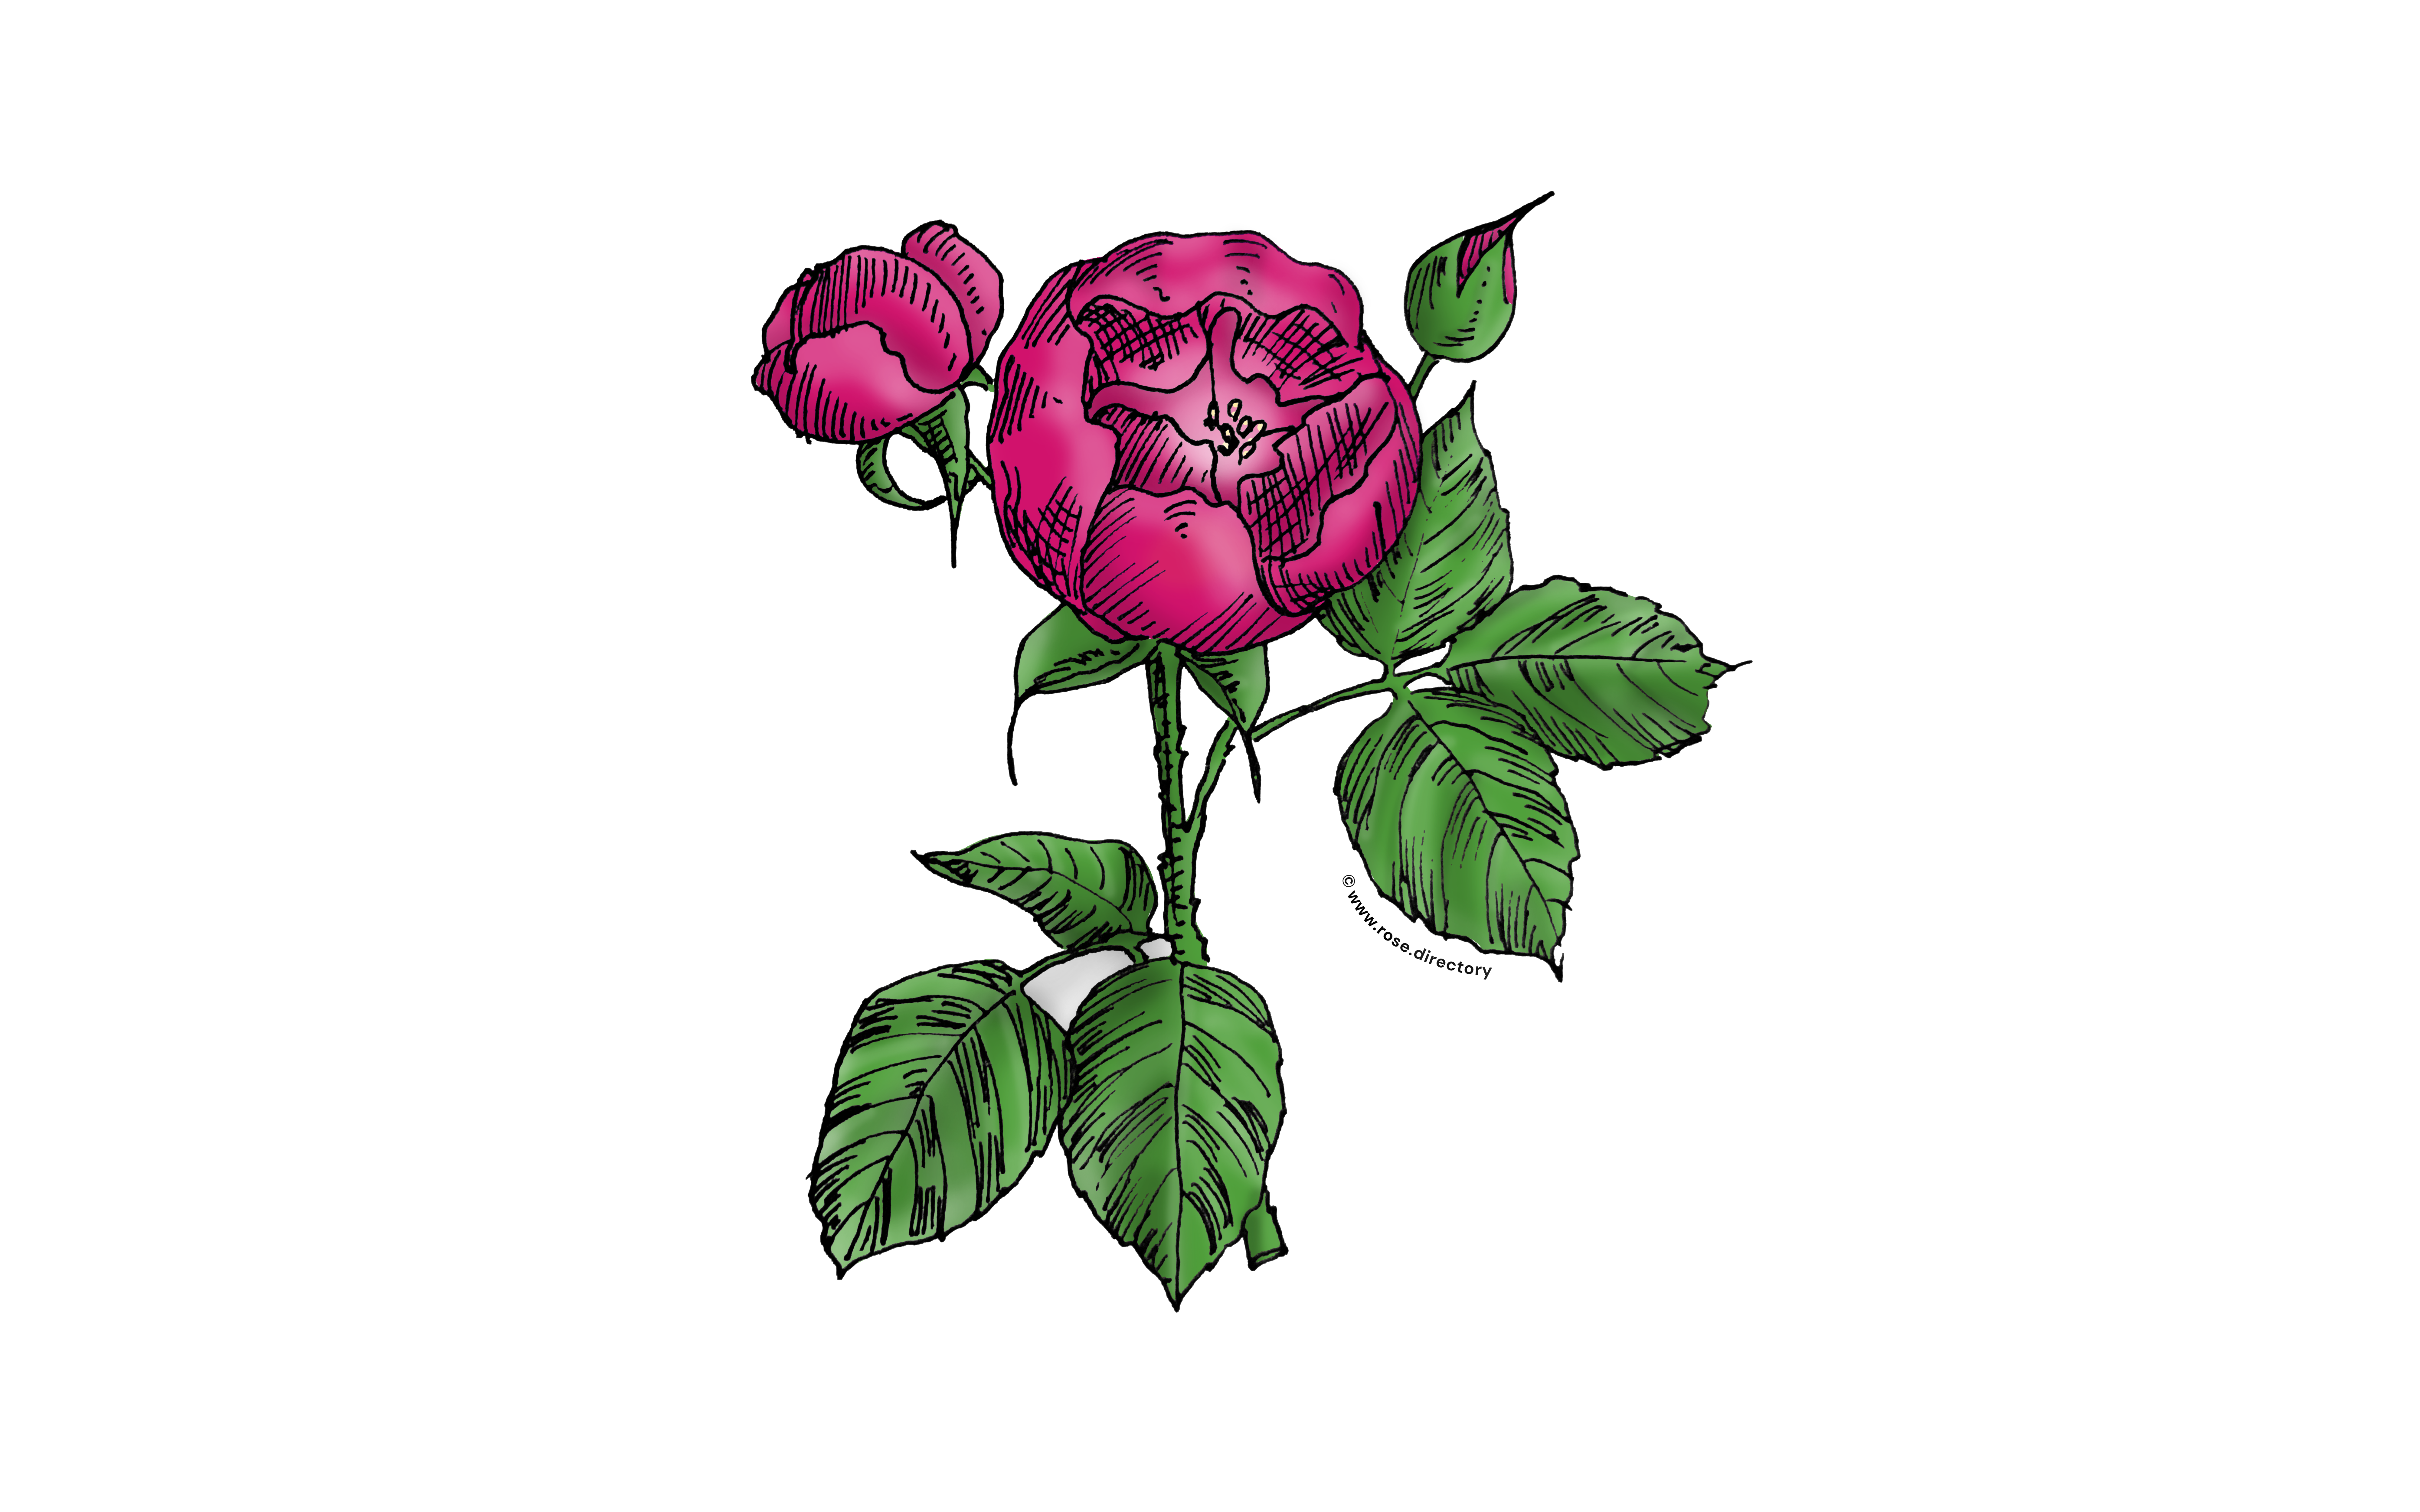 Deep Pink Globular Rose Bloom Semi-Double 8-15 Petals In 2 Rows